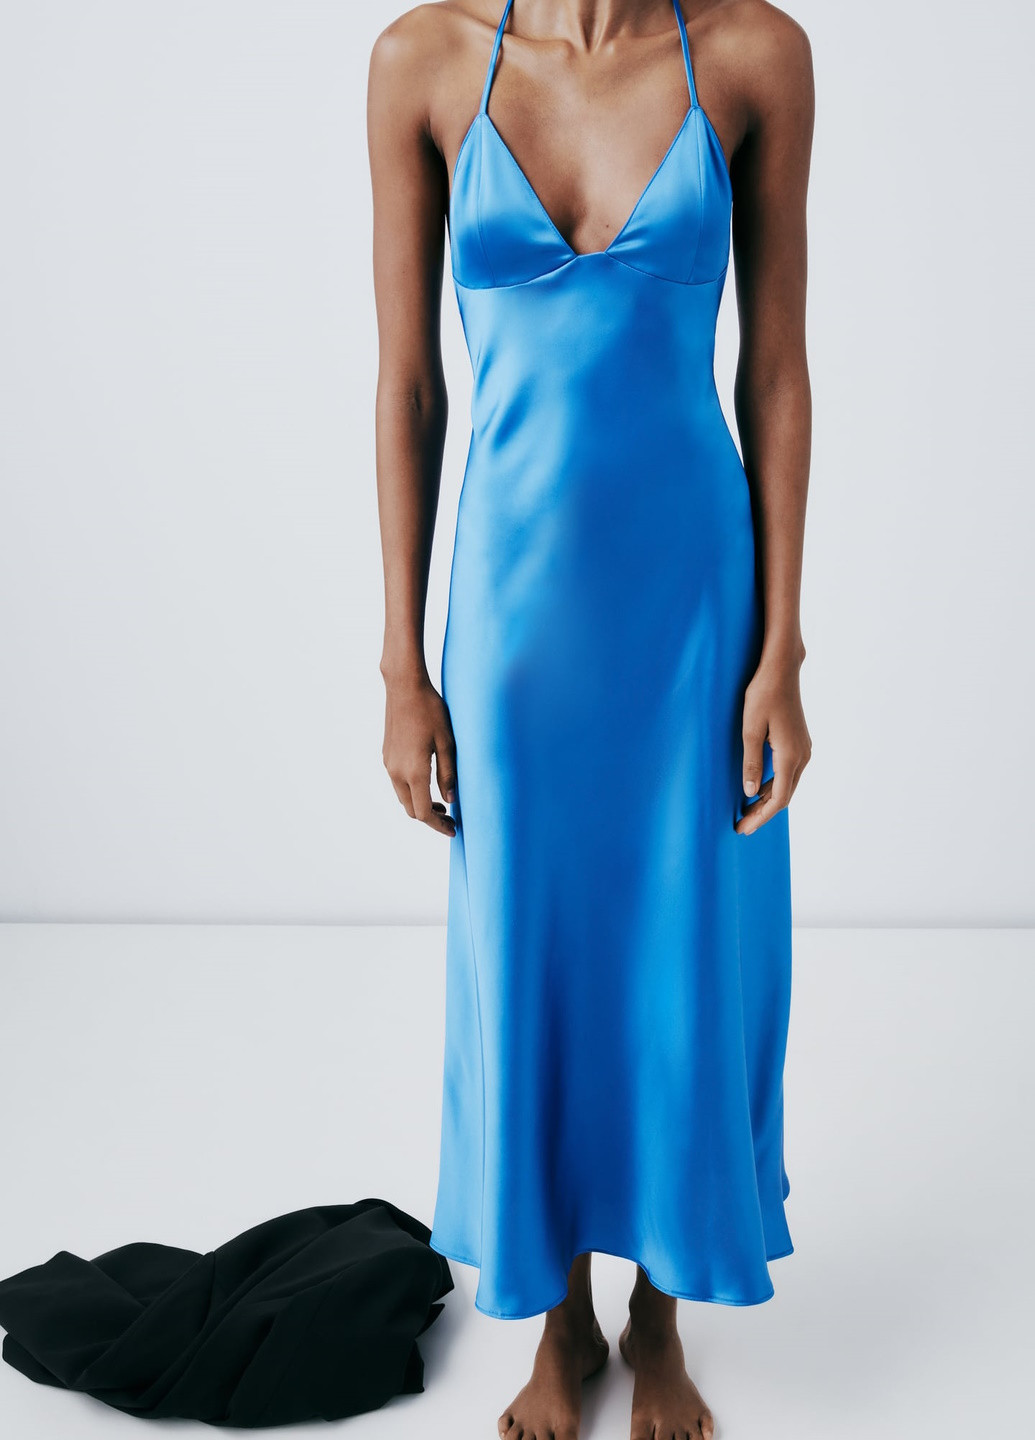 Светло-синее домашнее платье Zara однотонное